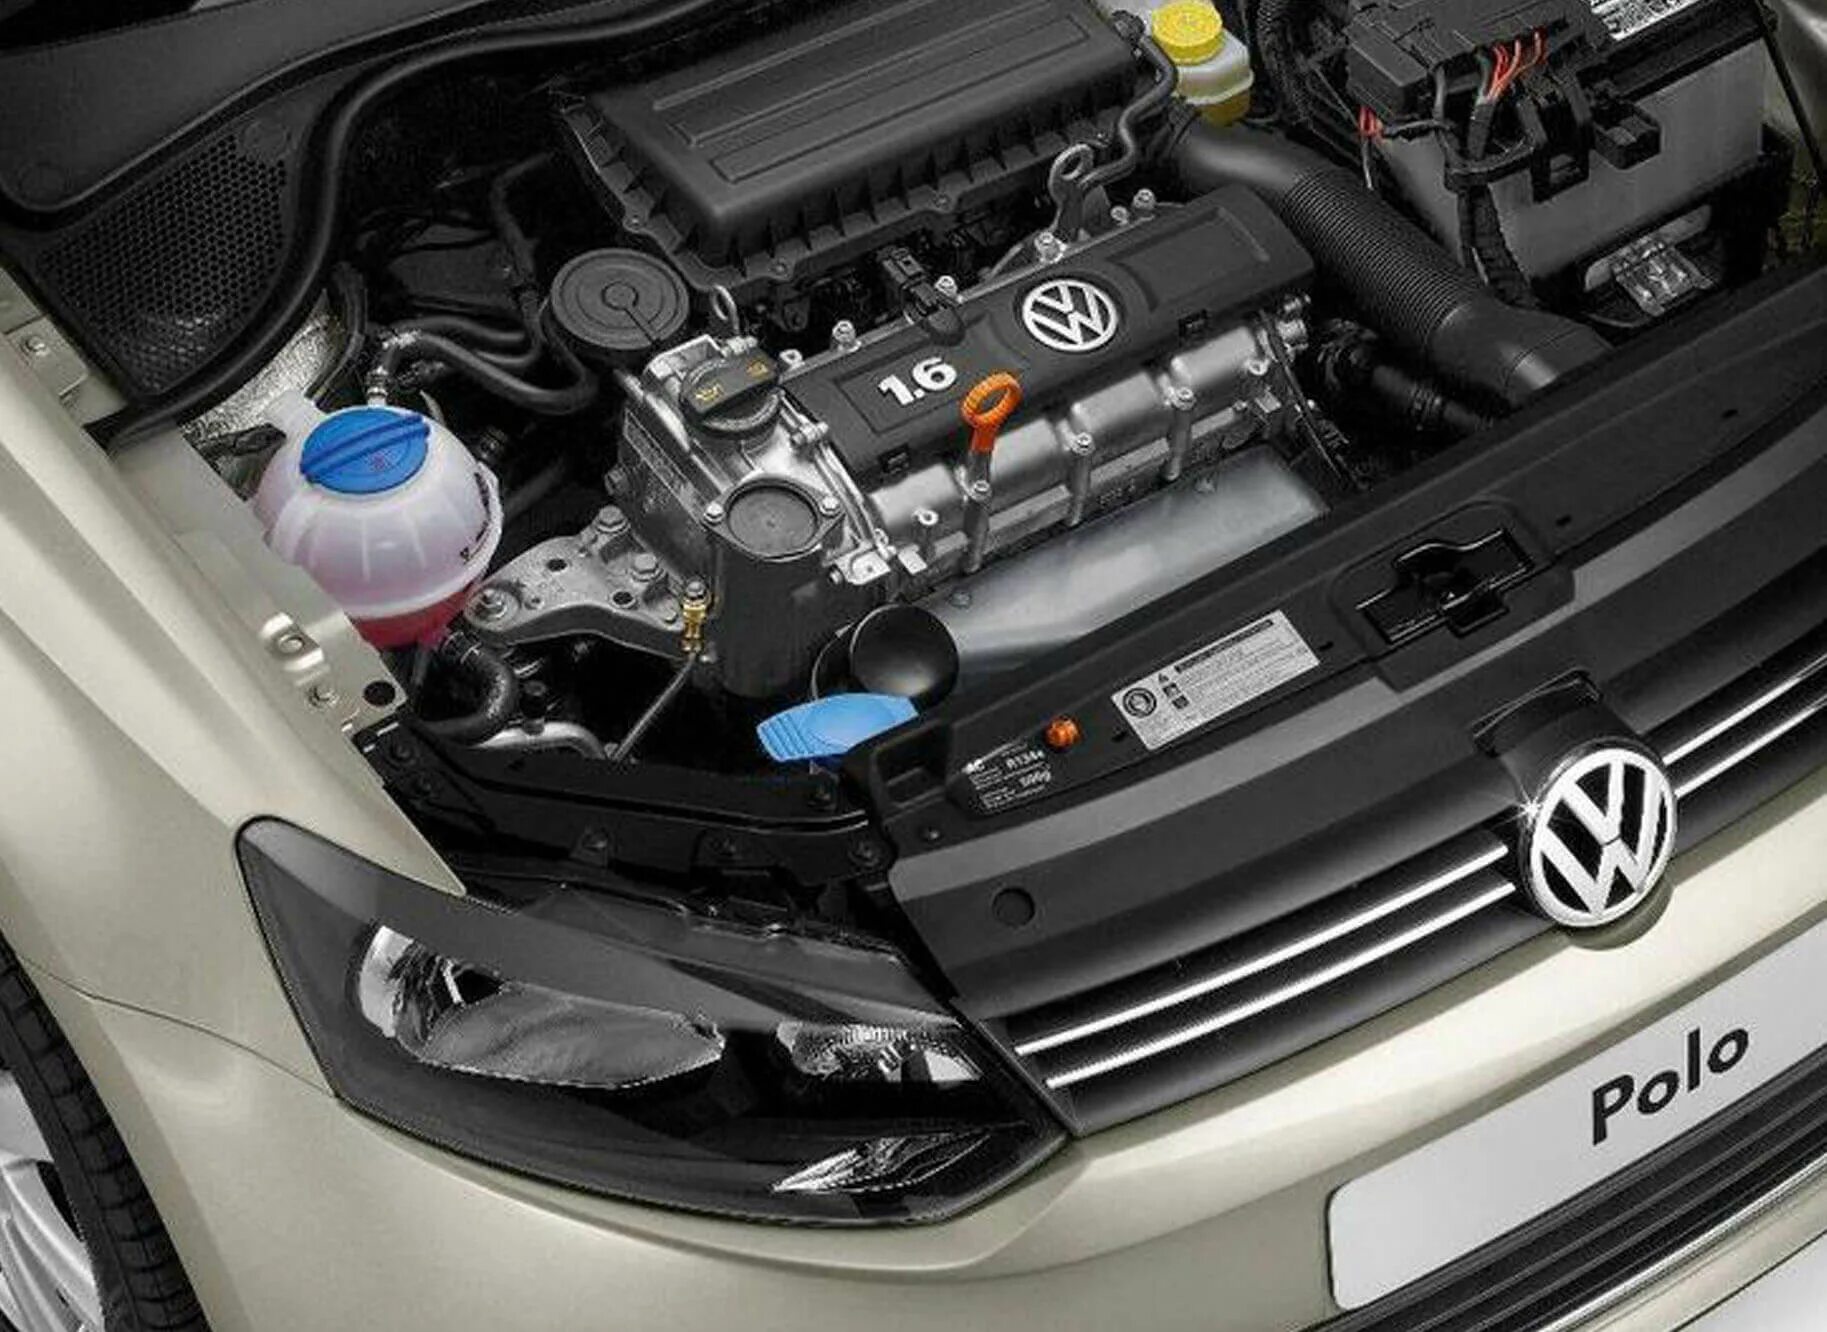 Ремонт двигателя поло. Двигатель Фольксваген поло 1.6. Движок Фольксваген поло седан 2014. Ваг 1.6 двигатель поло. Мотор VW Polo 1.6 2018.